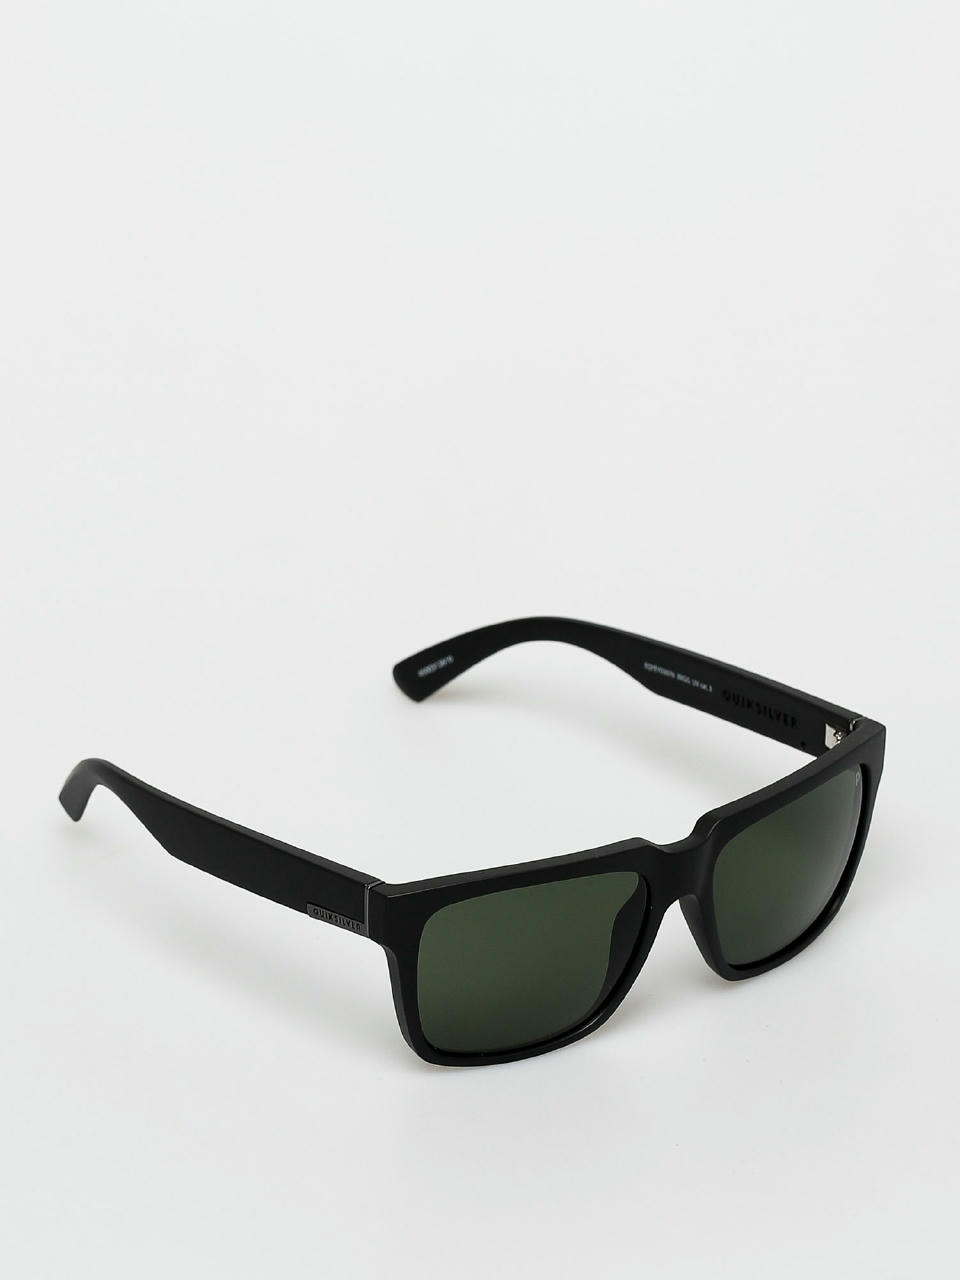 Quiksilver Bruiser Polarized black/green p) (matte Sunglasses